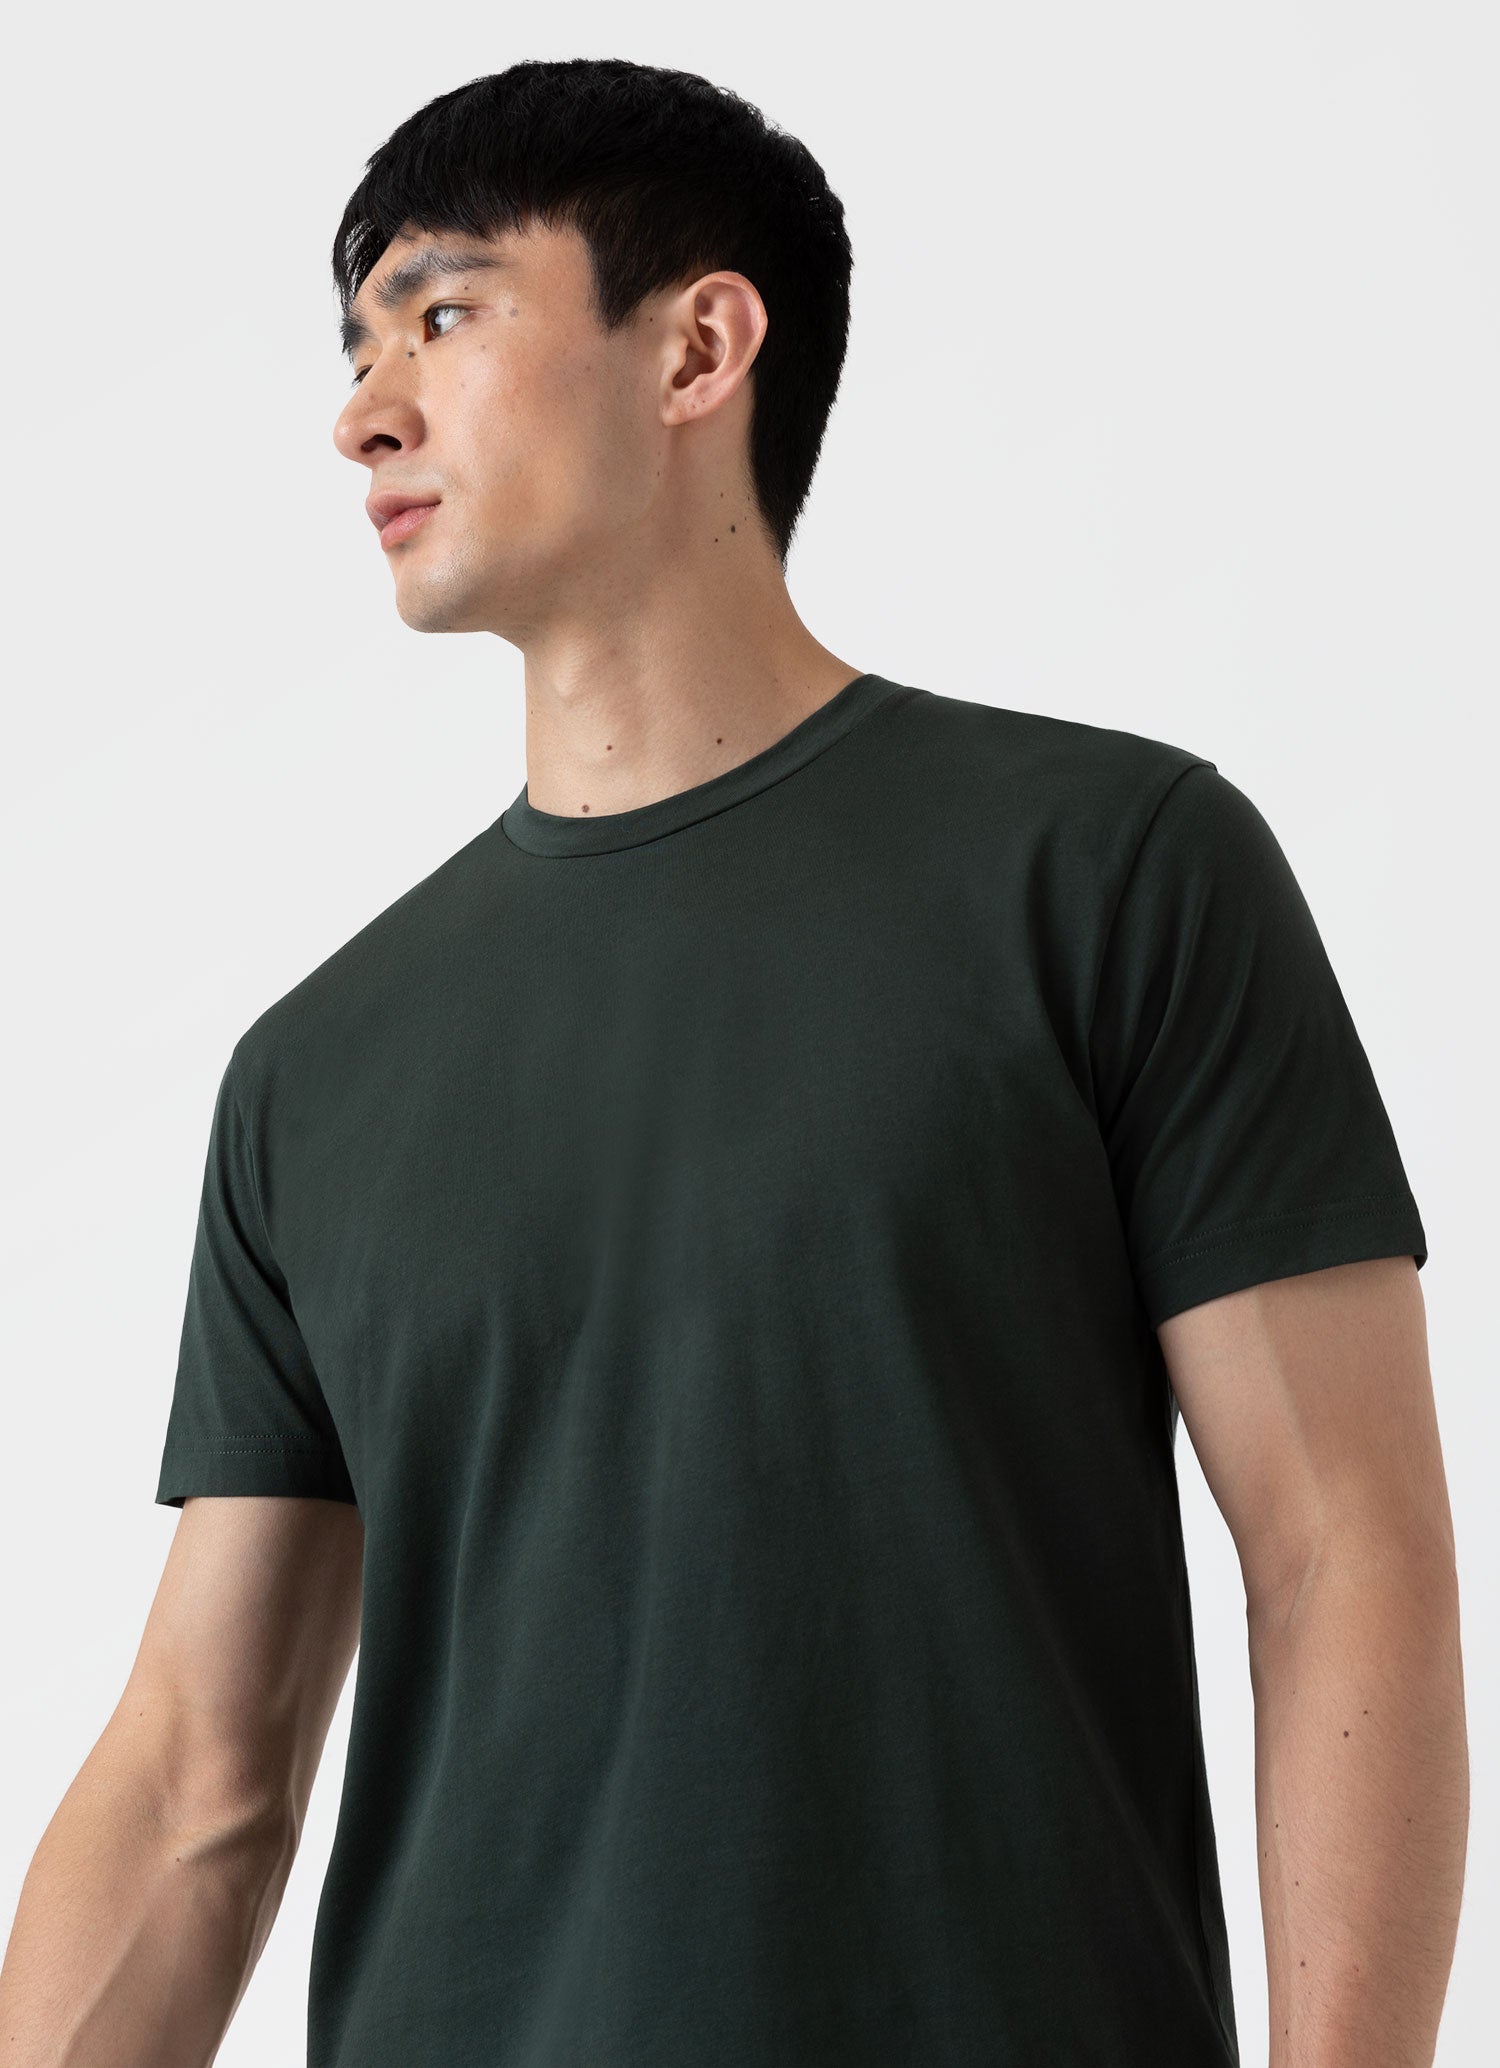 Men's Riviera T-shirt in Seaweed